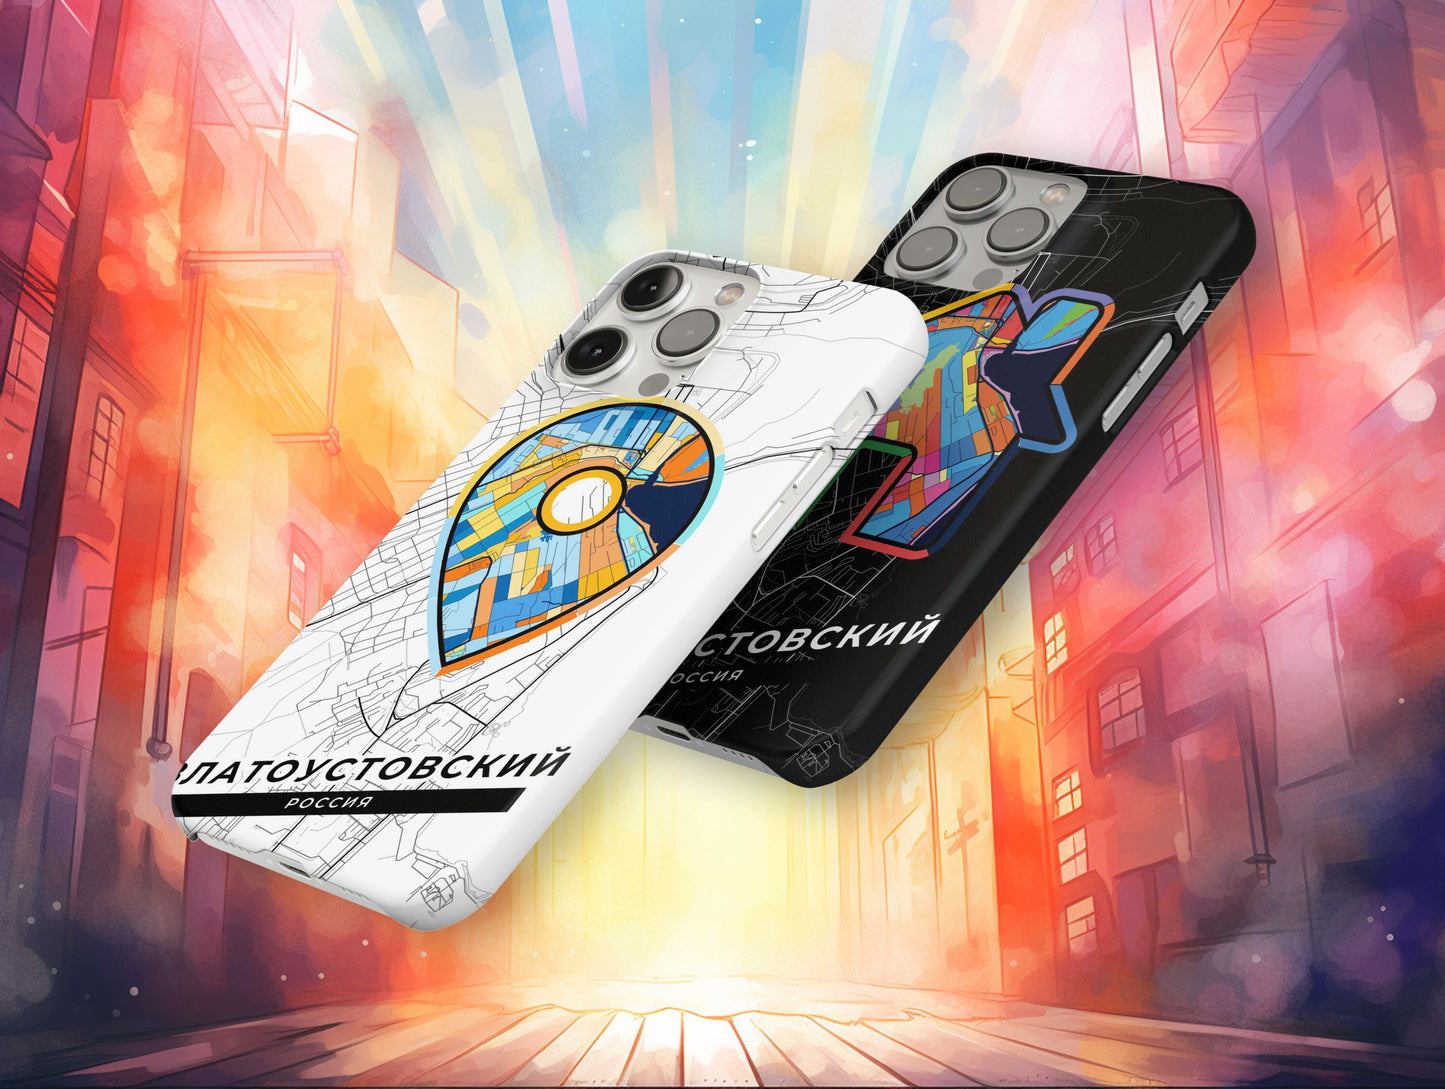 Zlatoust Russia slim phone case with colorful icon